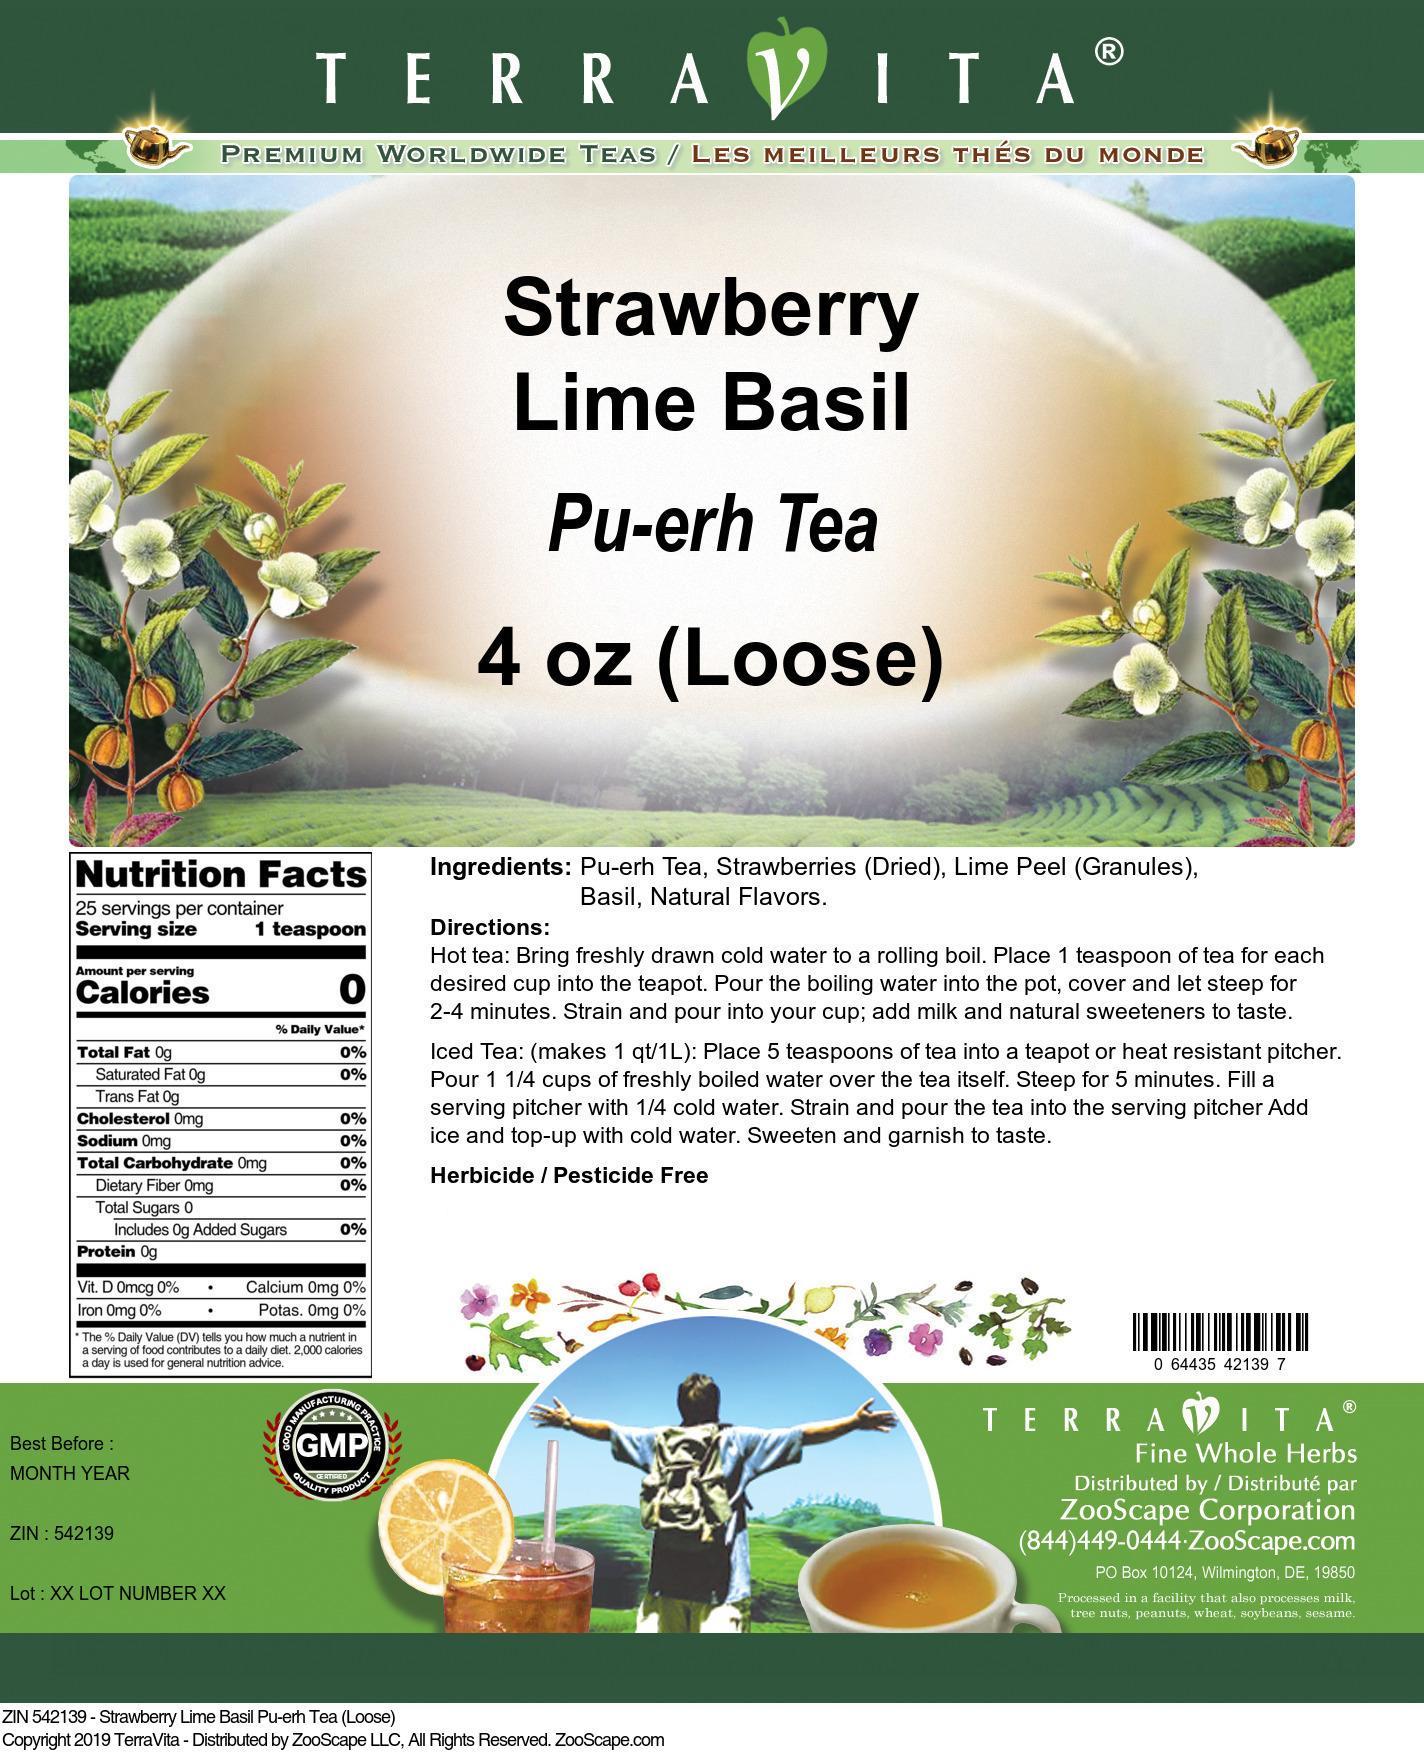 Strawberry Lime Basil Pu-erh Tea (Loose) - Label